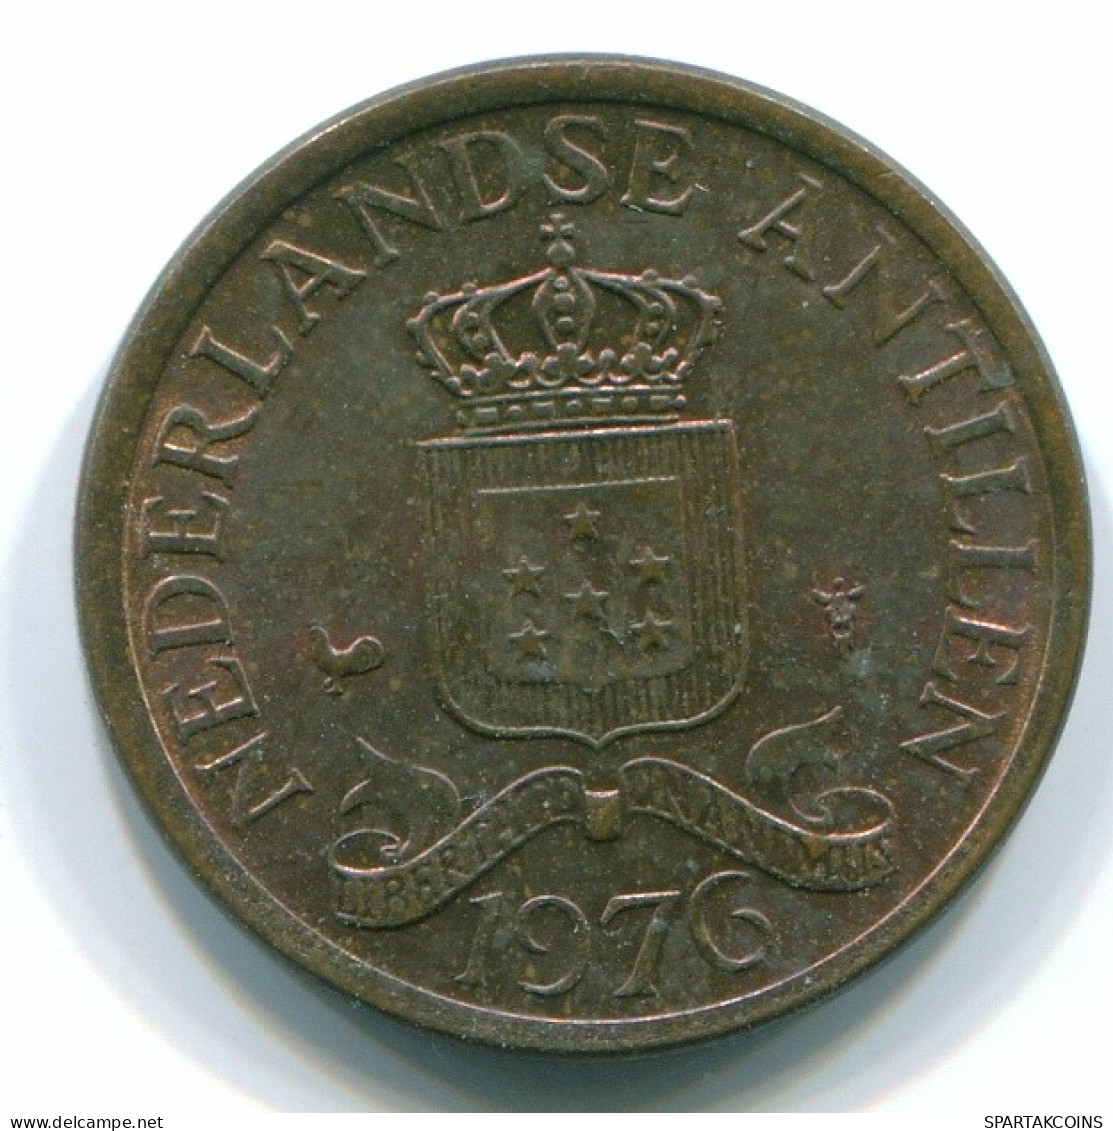 1 CENT 1976 NIEDERLÄNDISCHE ANTILLEN Bronze Koloniale Münze #S10690.D.A - Netherlands Antilles